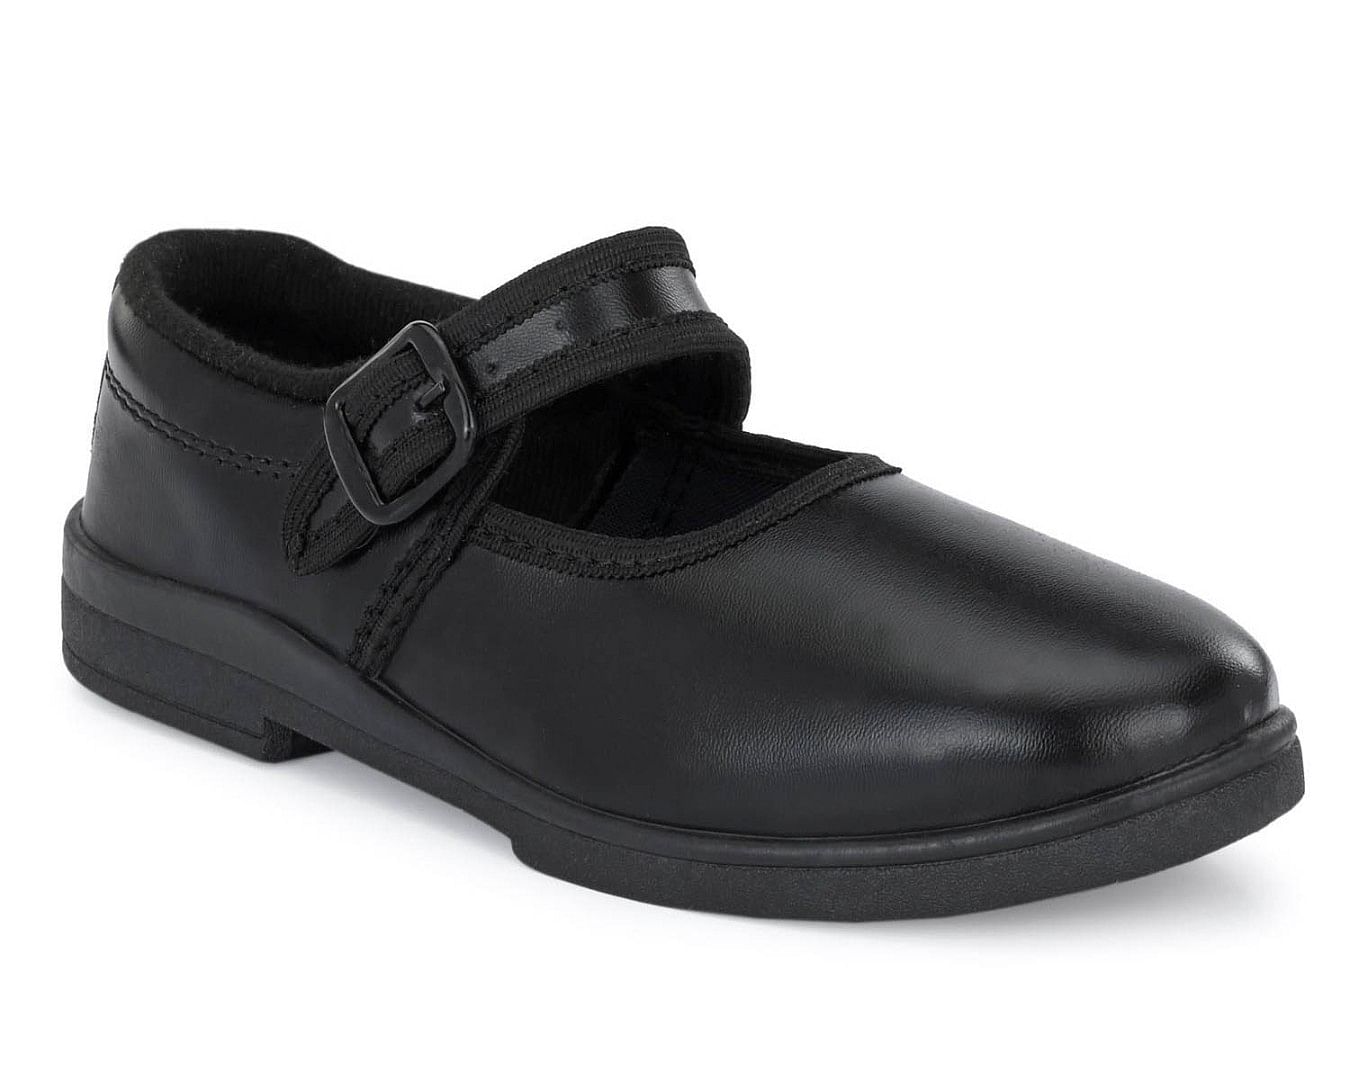 Pair-it Girls PVC School Shoe - 1,2,3 - Black